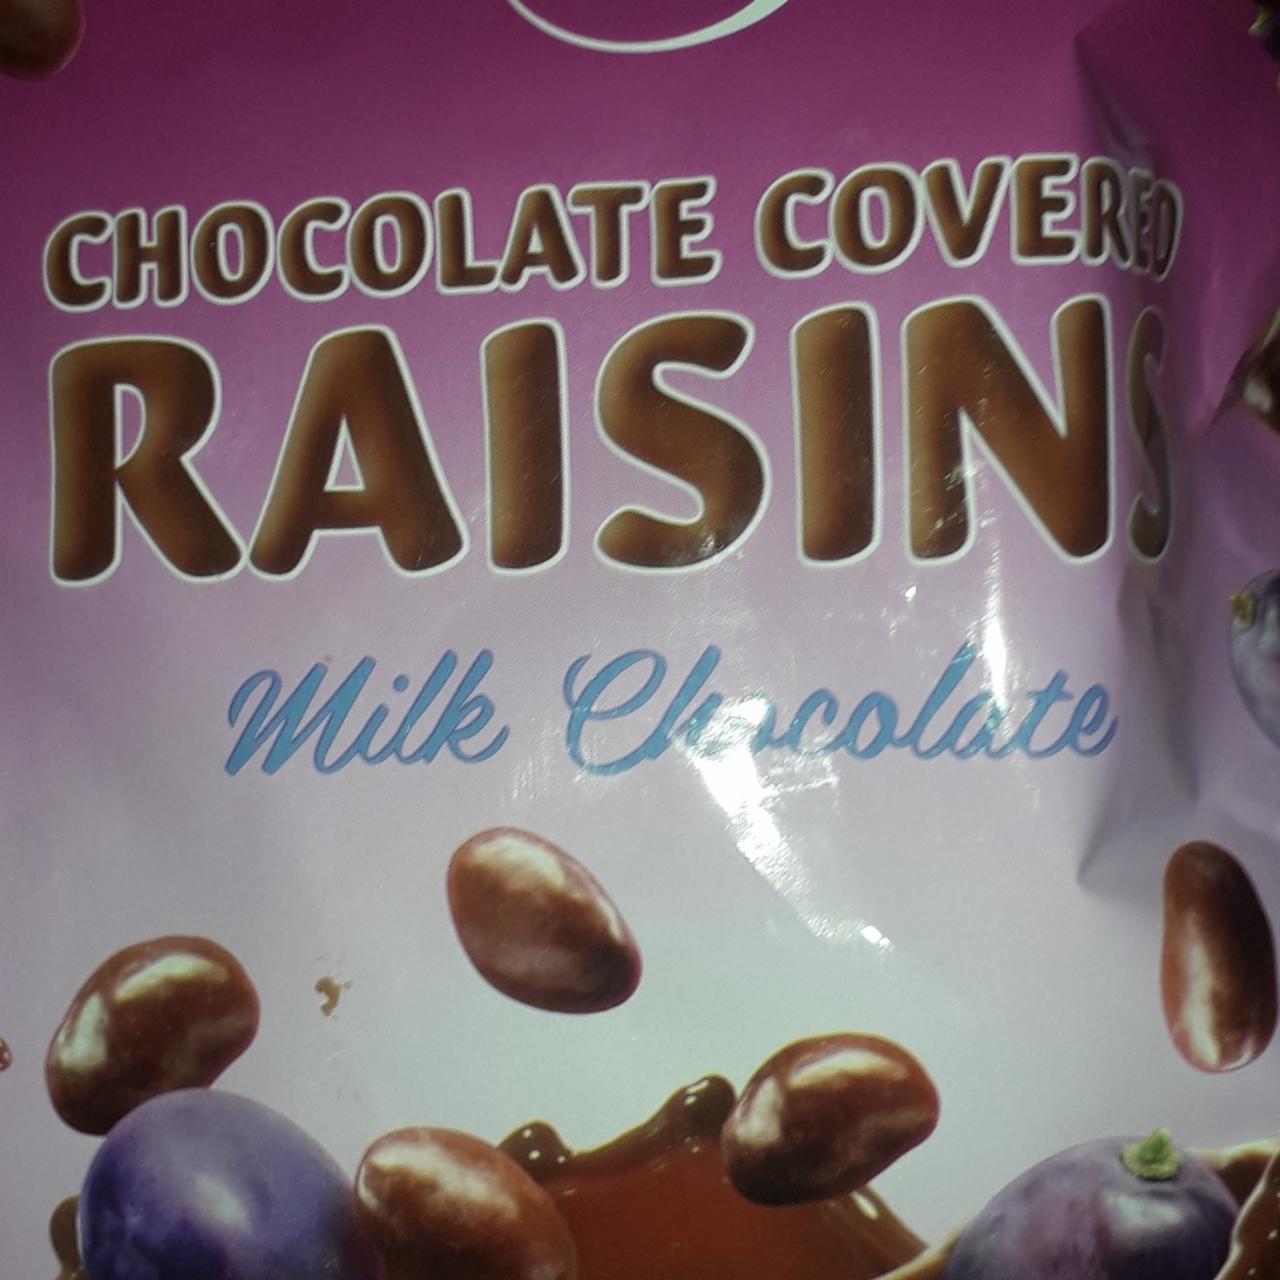 Képek - Chocolate covered raisins Milk chocolate Chocola